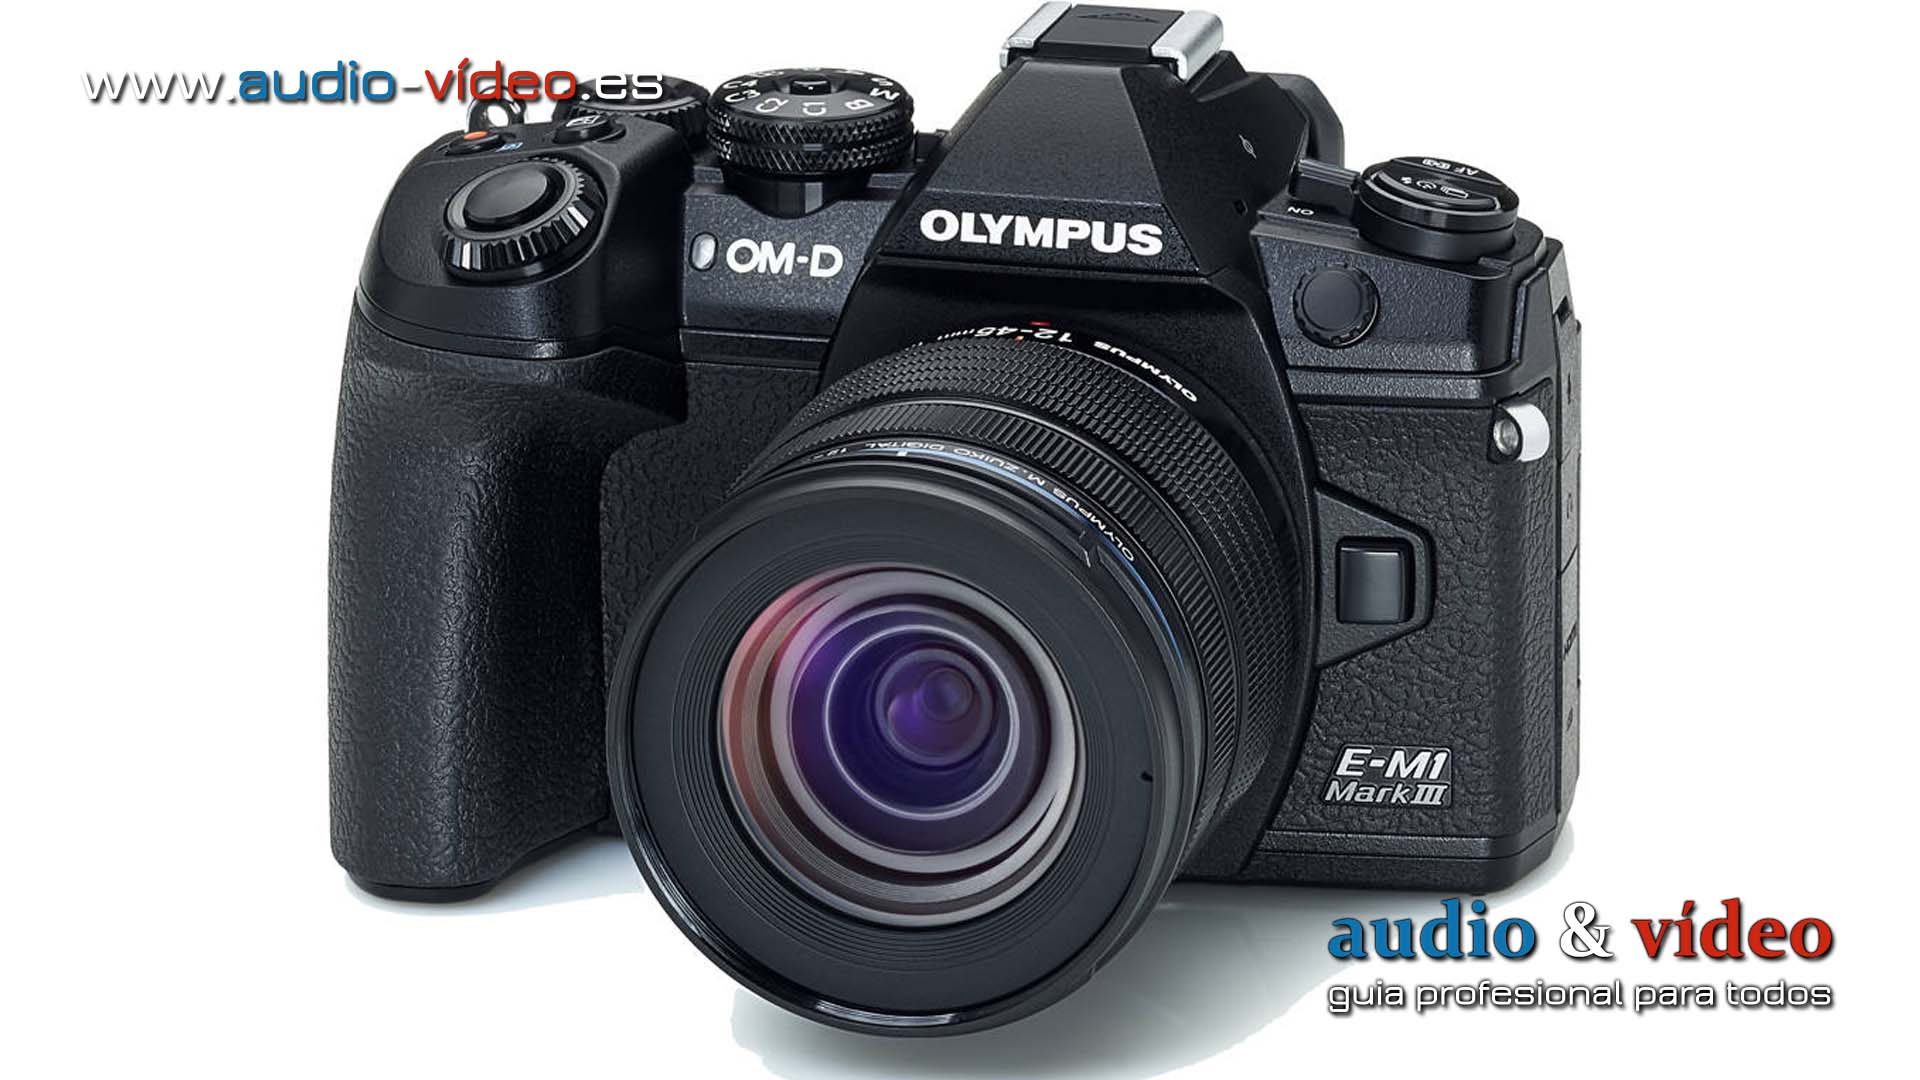 Olympus presenta nueva cámara profesional OM-D E-M1 Mark III.